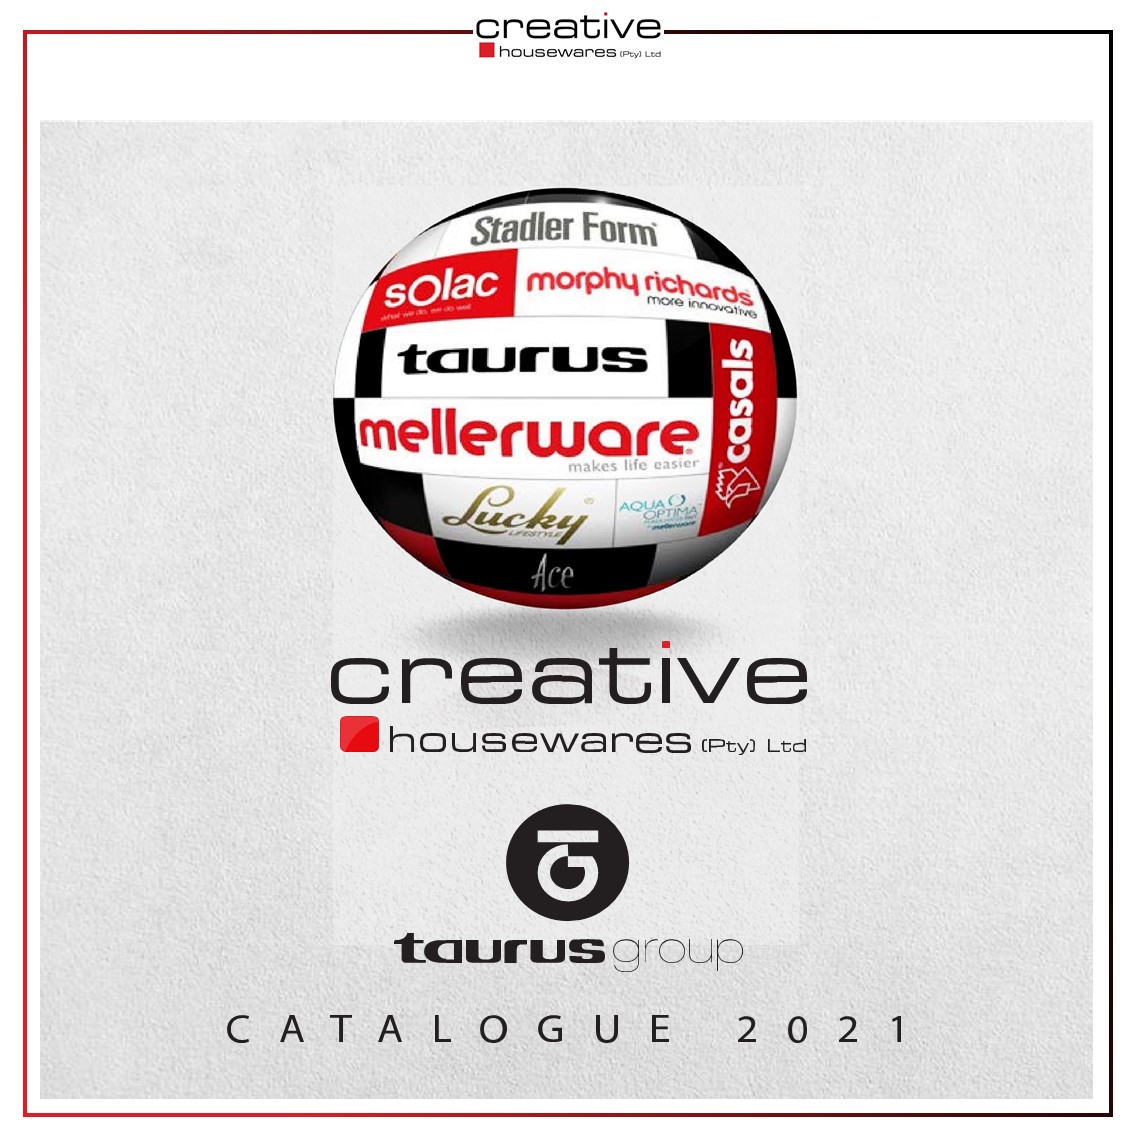 Creative Housewares - 2021 Catalogue Catalogue